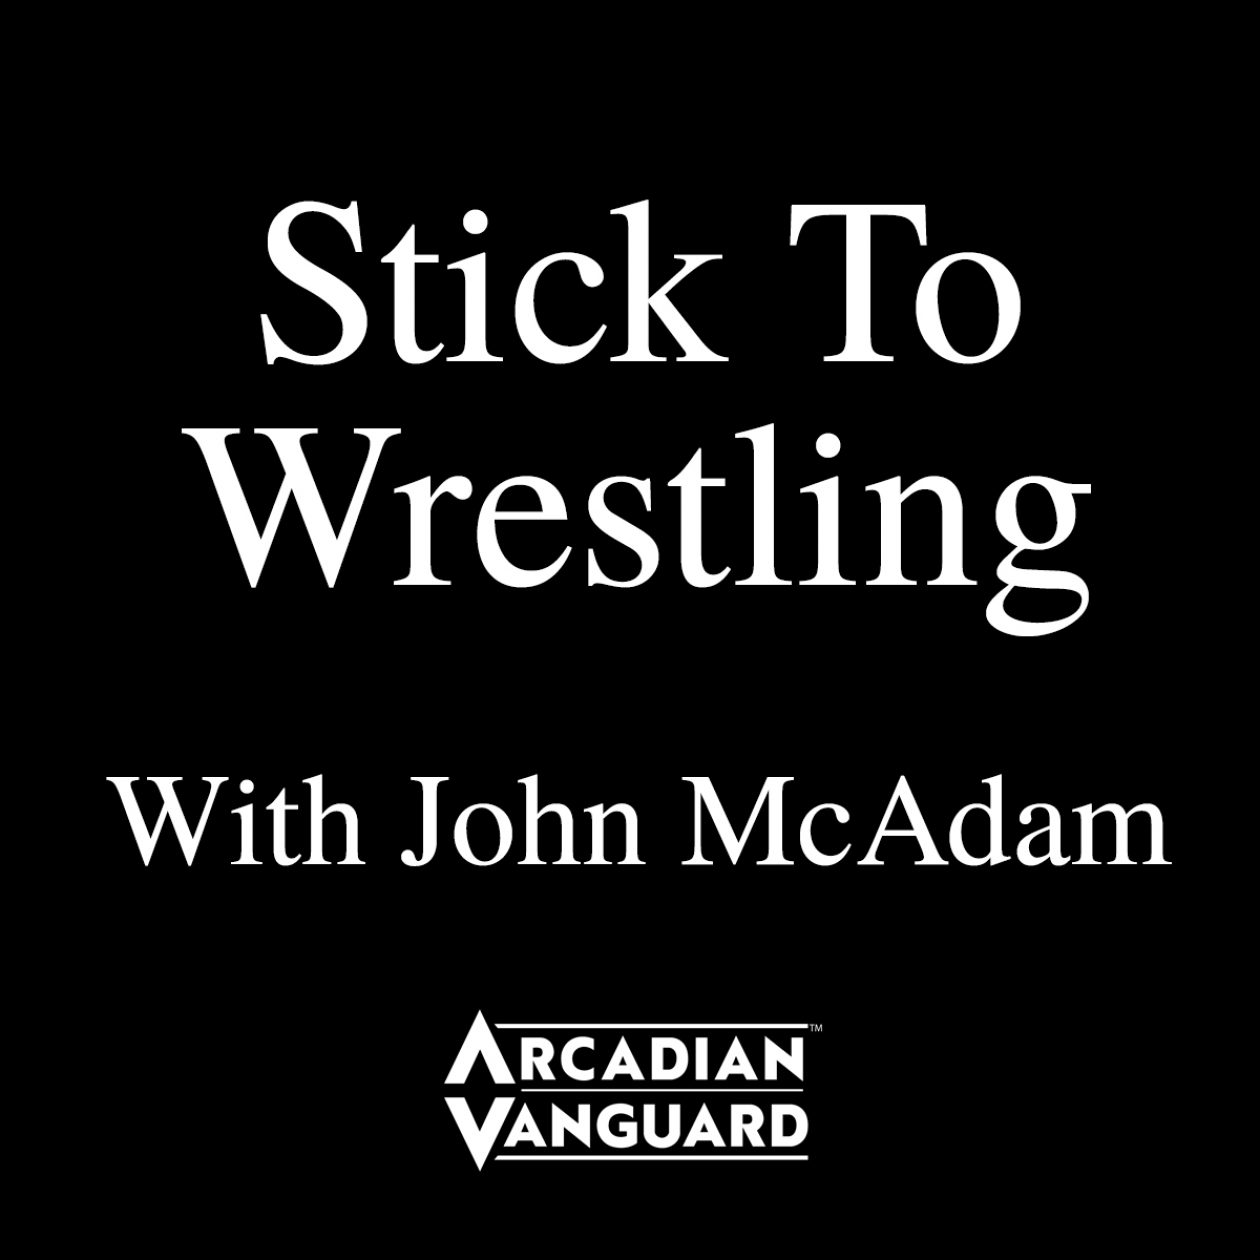 Stick To Wrestling with John McAdam